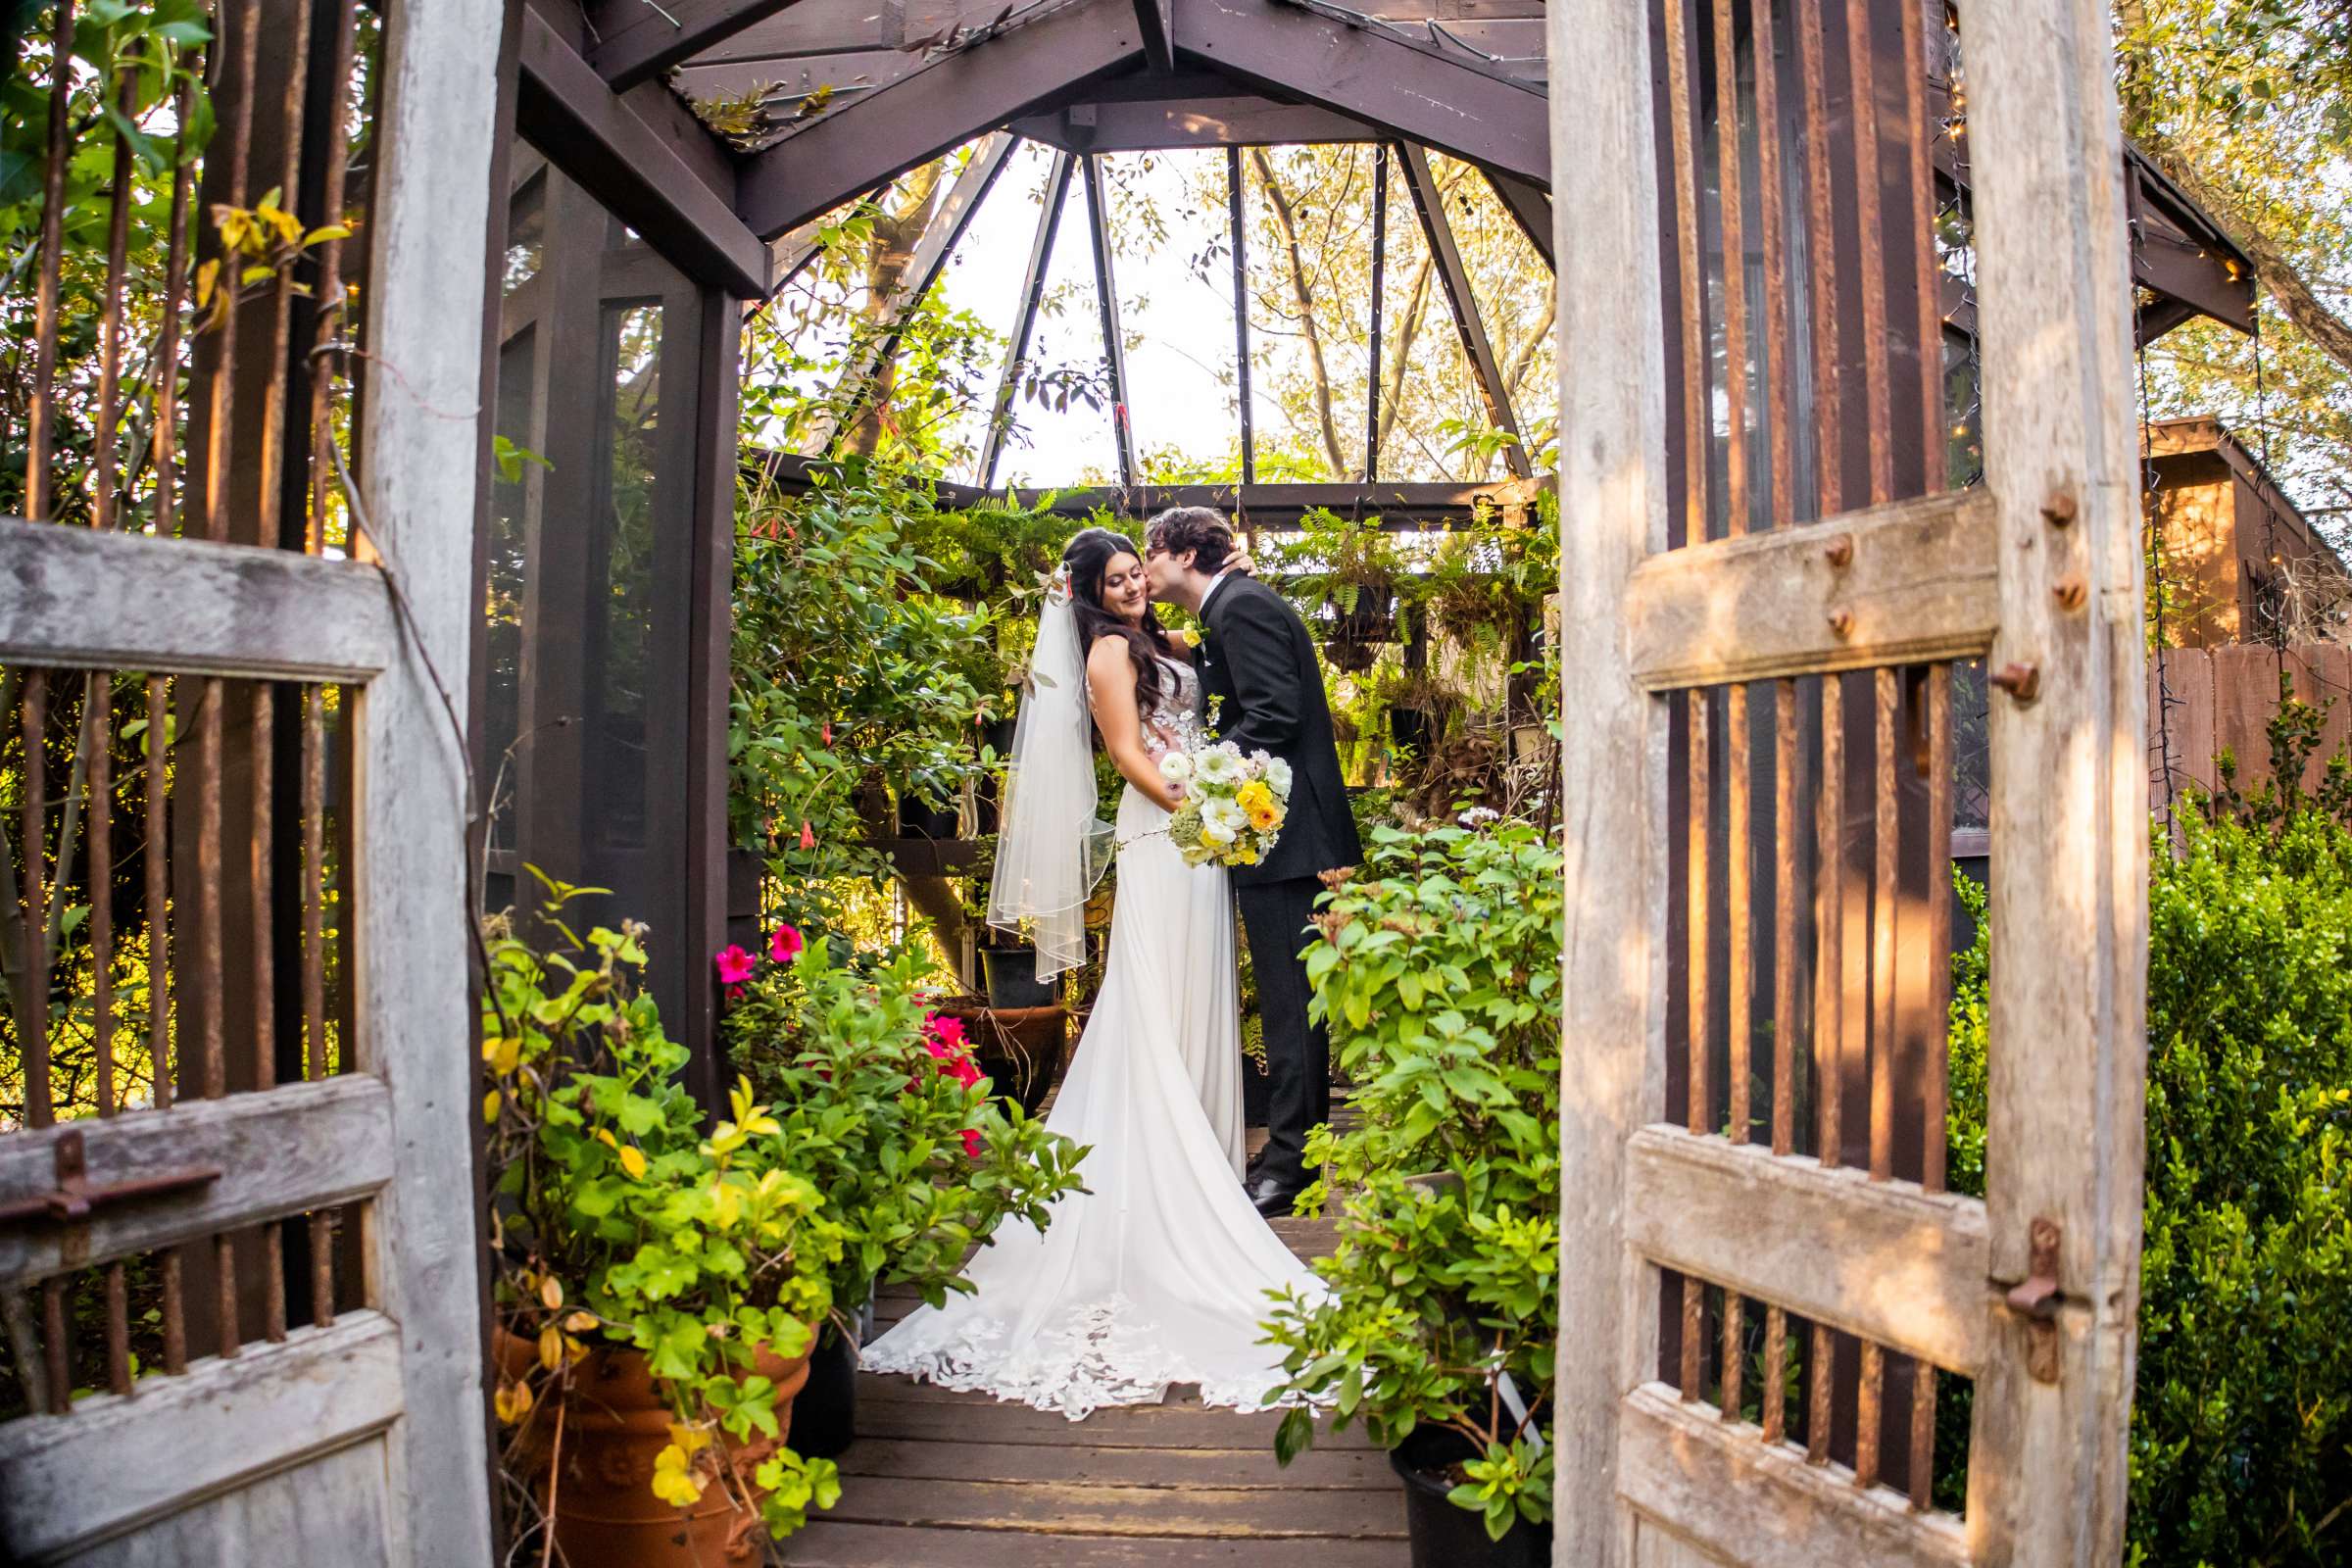 Twin Oaks House & Gardens Wedding Estate Wedding, Bridget and Trace Wedding Photo #7 by True Photography